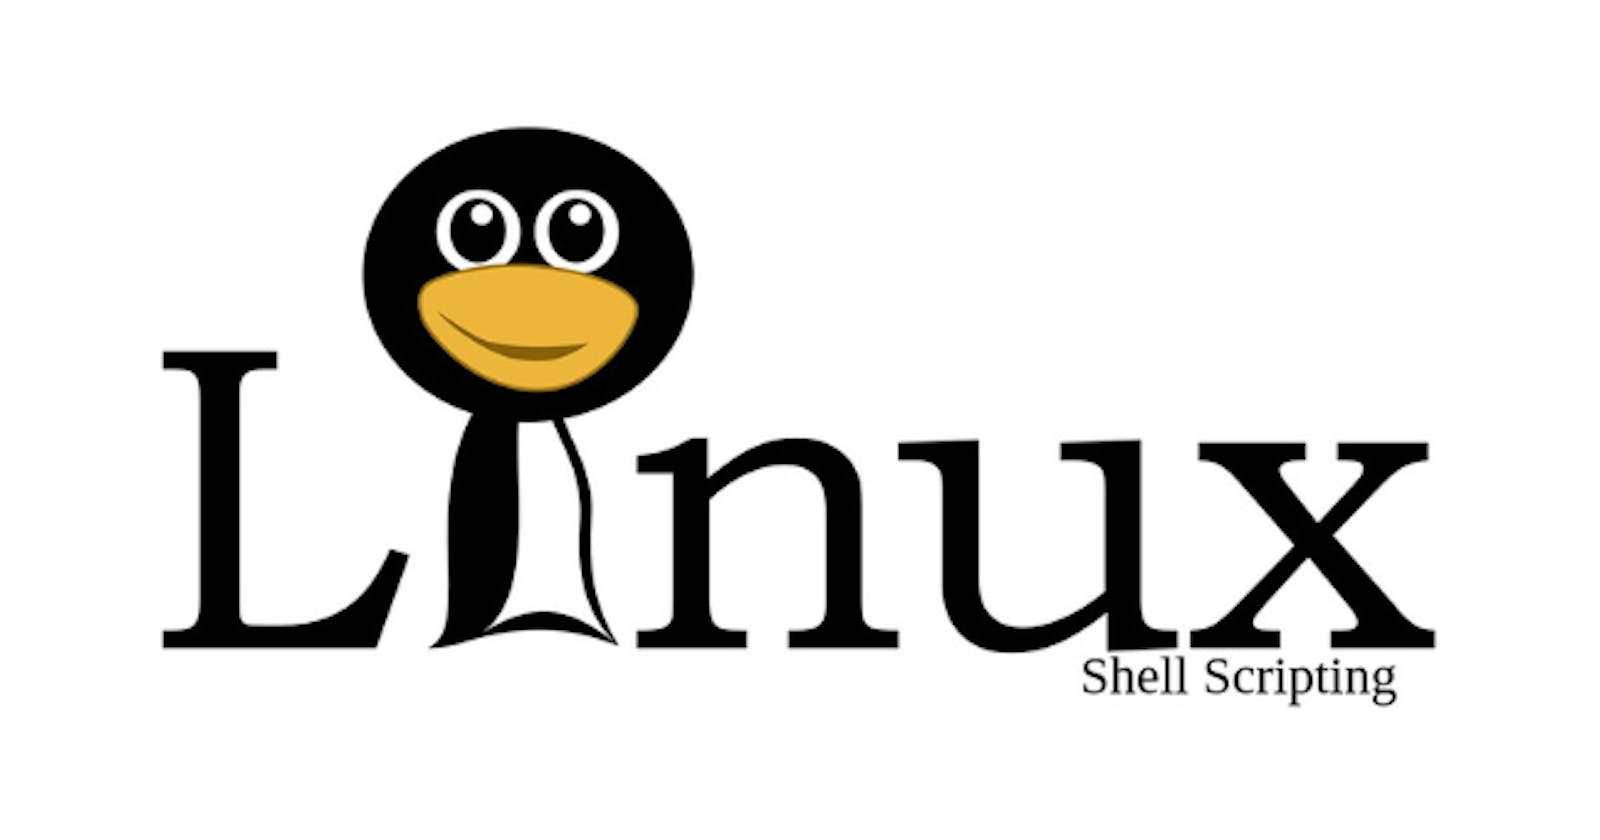 Day 4 - Basic Linux Shell Scripting